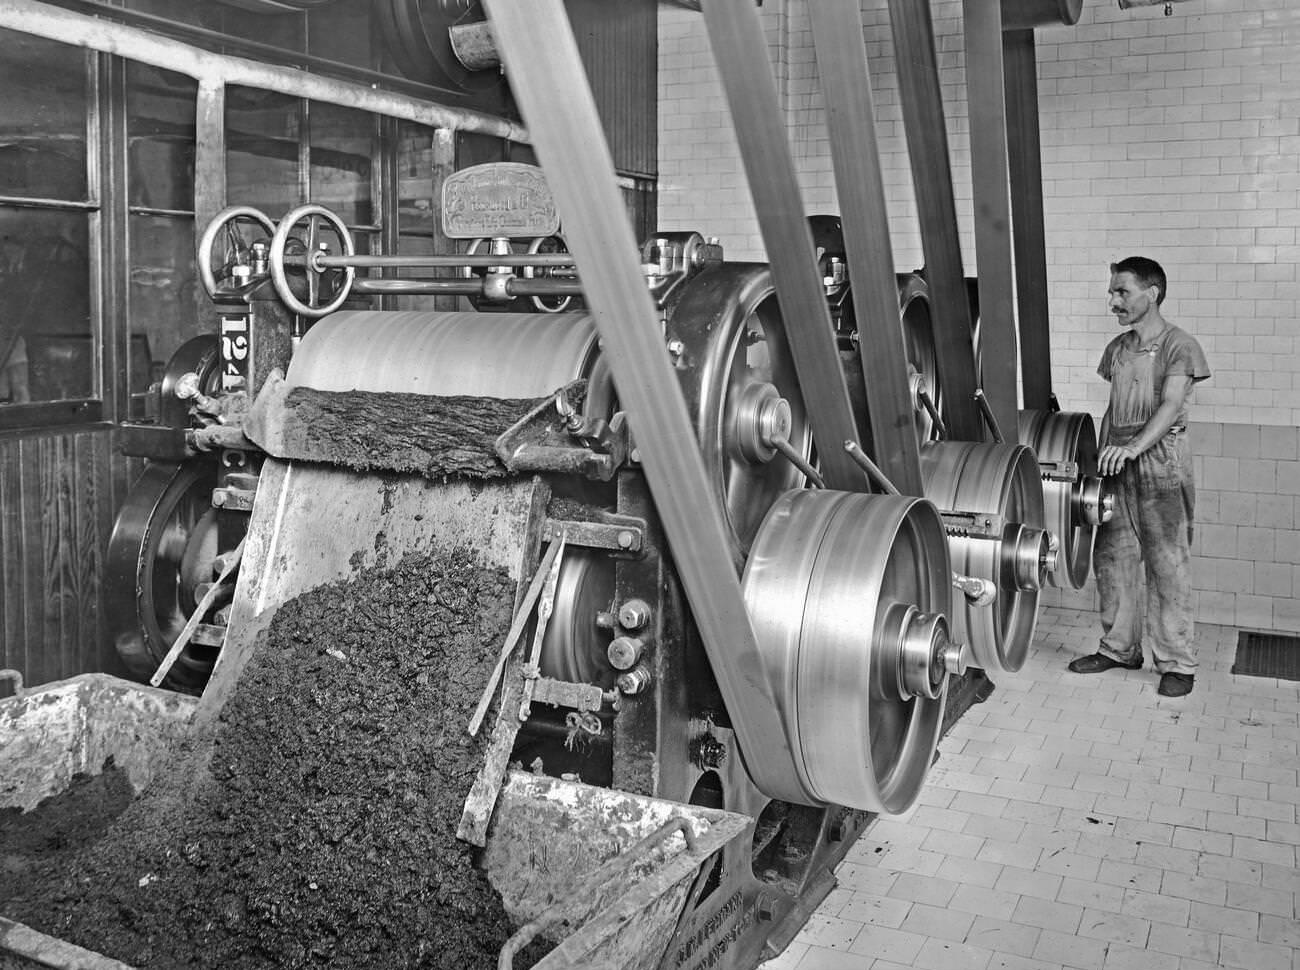 Rockworld And Co. Roller Mills Refining Chocolate, Brooklyn, 1917